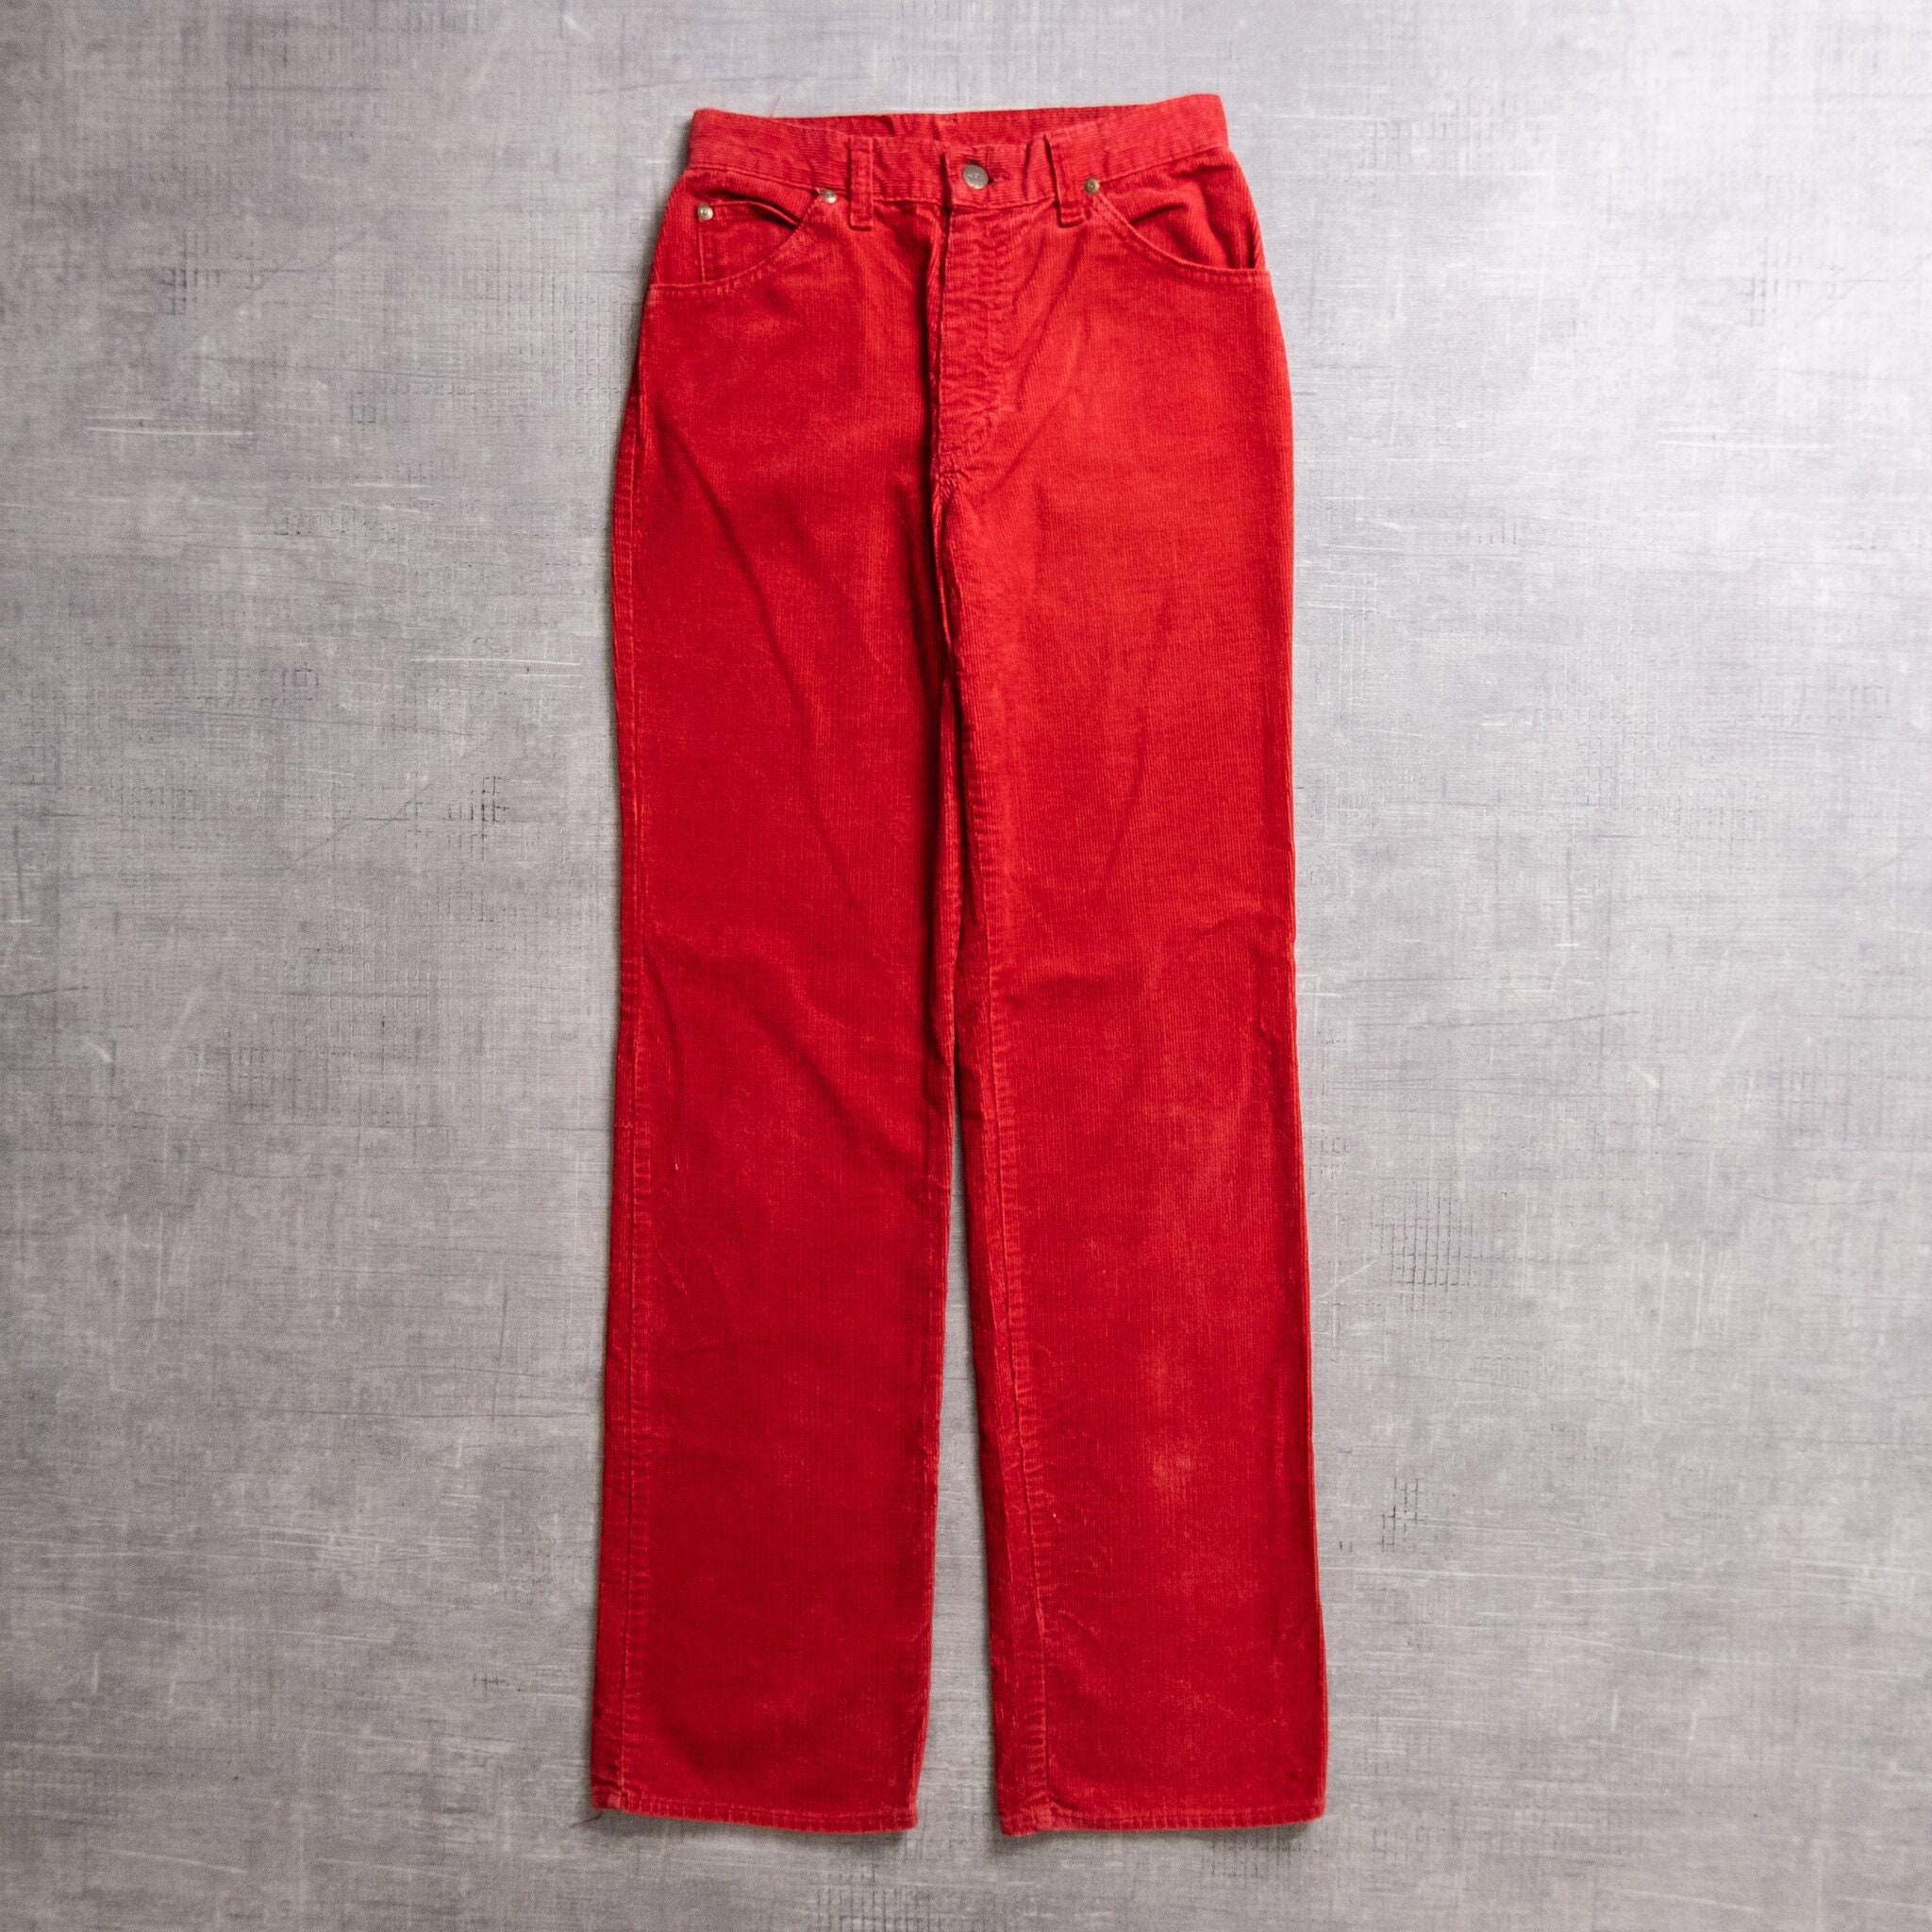 Men Corduroy Bell Bottom Flares Pants 60s 70s Vintage Retro Bootcut Trousers  Casual Hippie